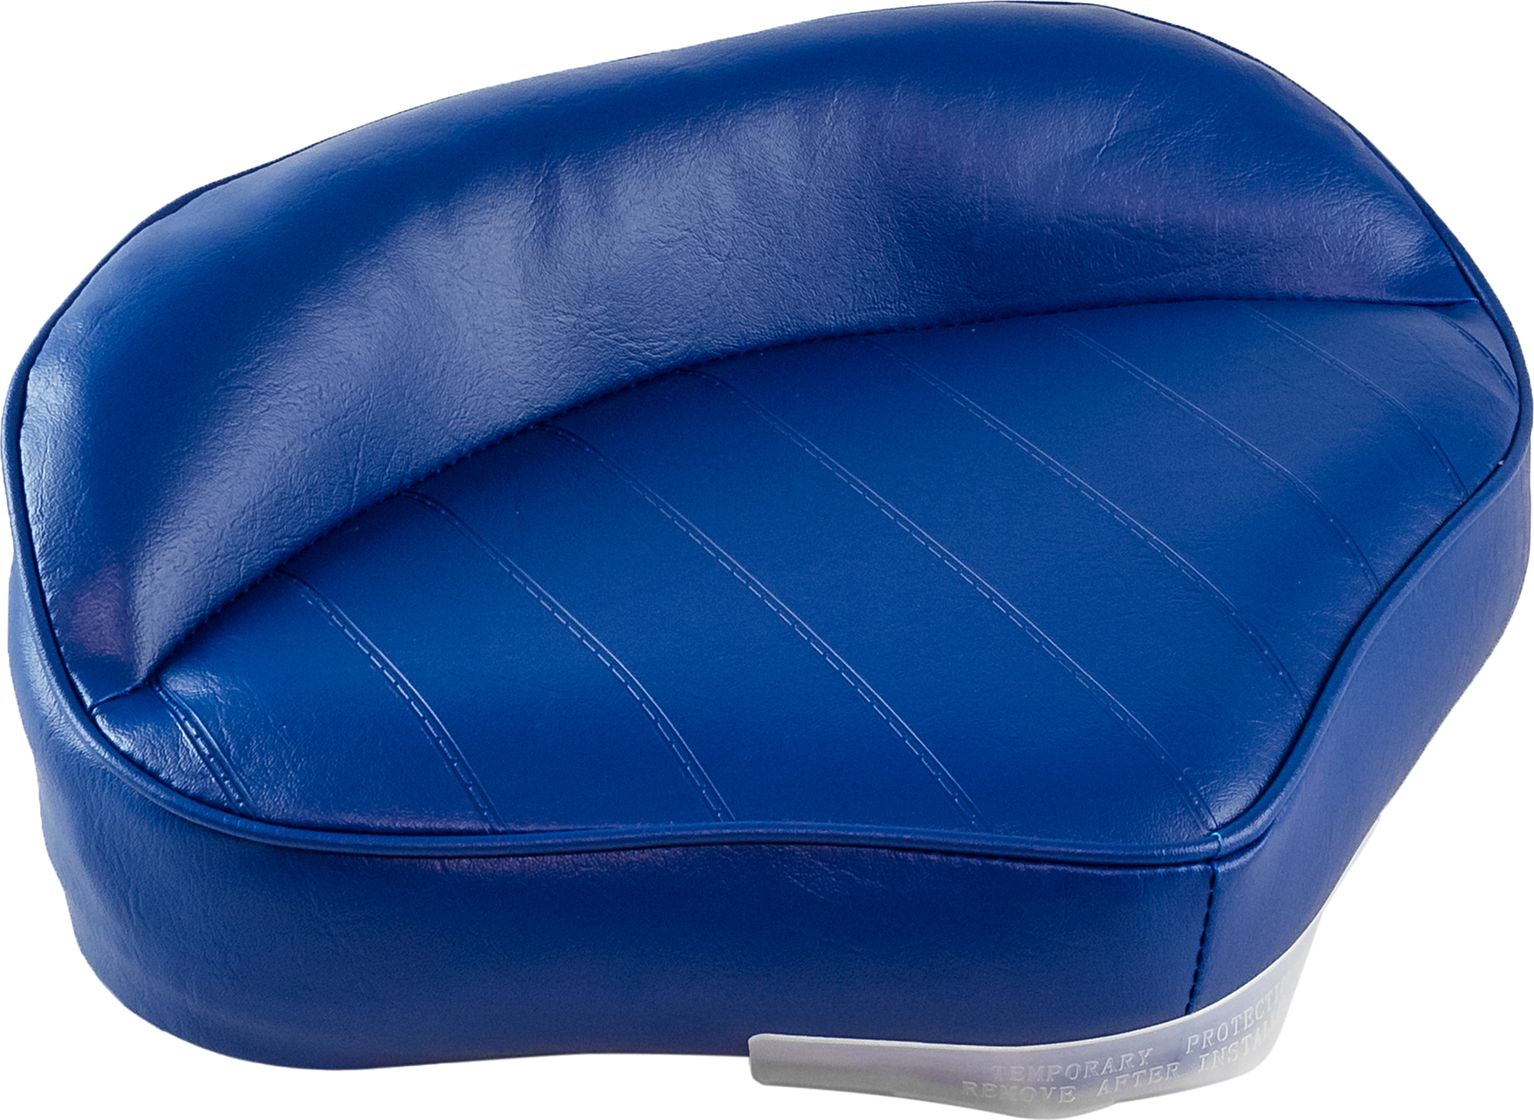 Сиденье мягкое PRO CASTING, обивка синий винил 75104B кресло складное мягкое classic low back seat серый синий 75102gb